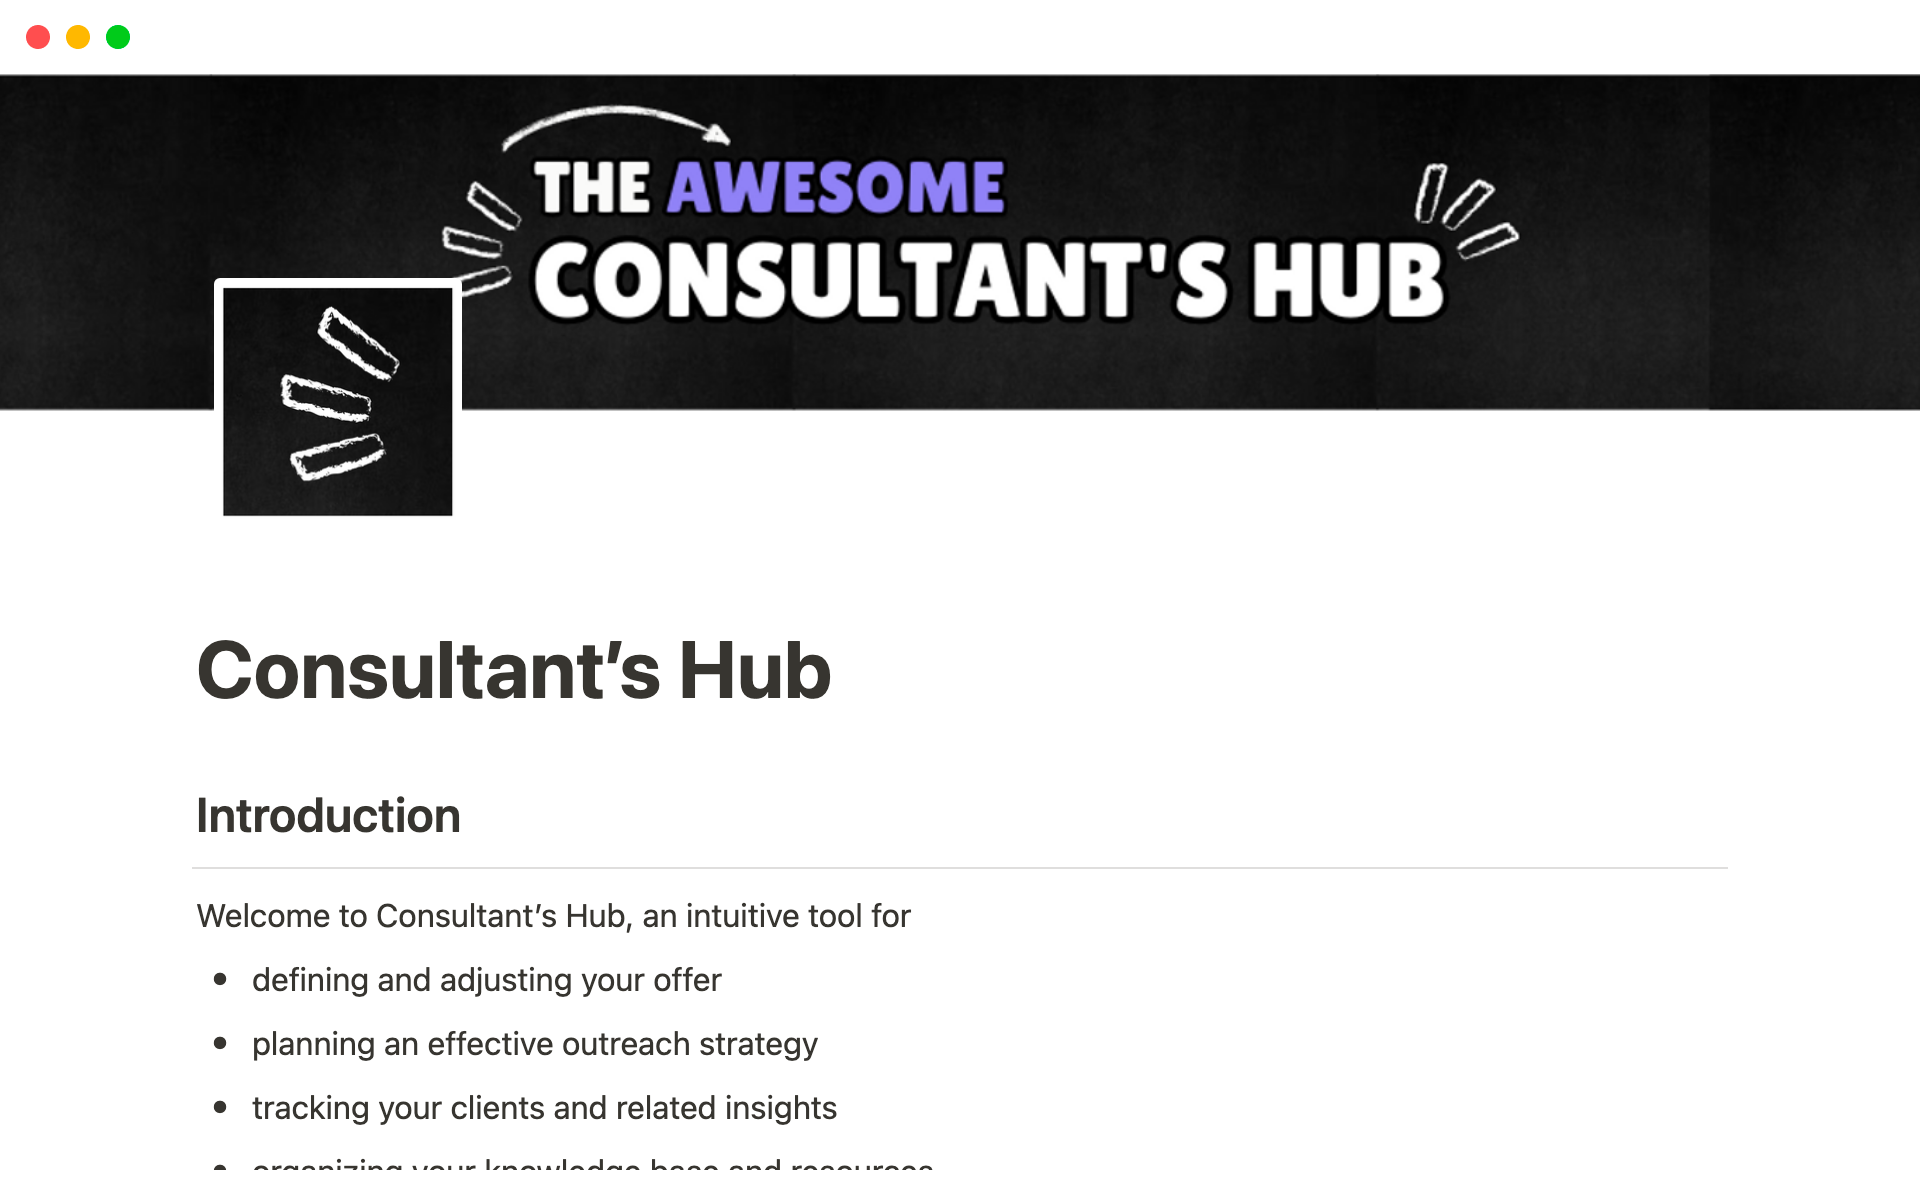 Vista previa de plantilla para Consultant's Hub